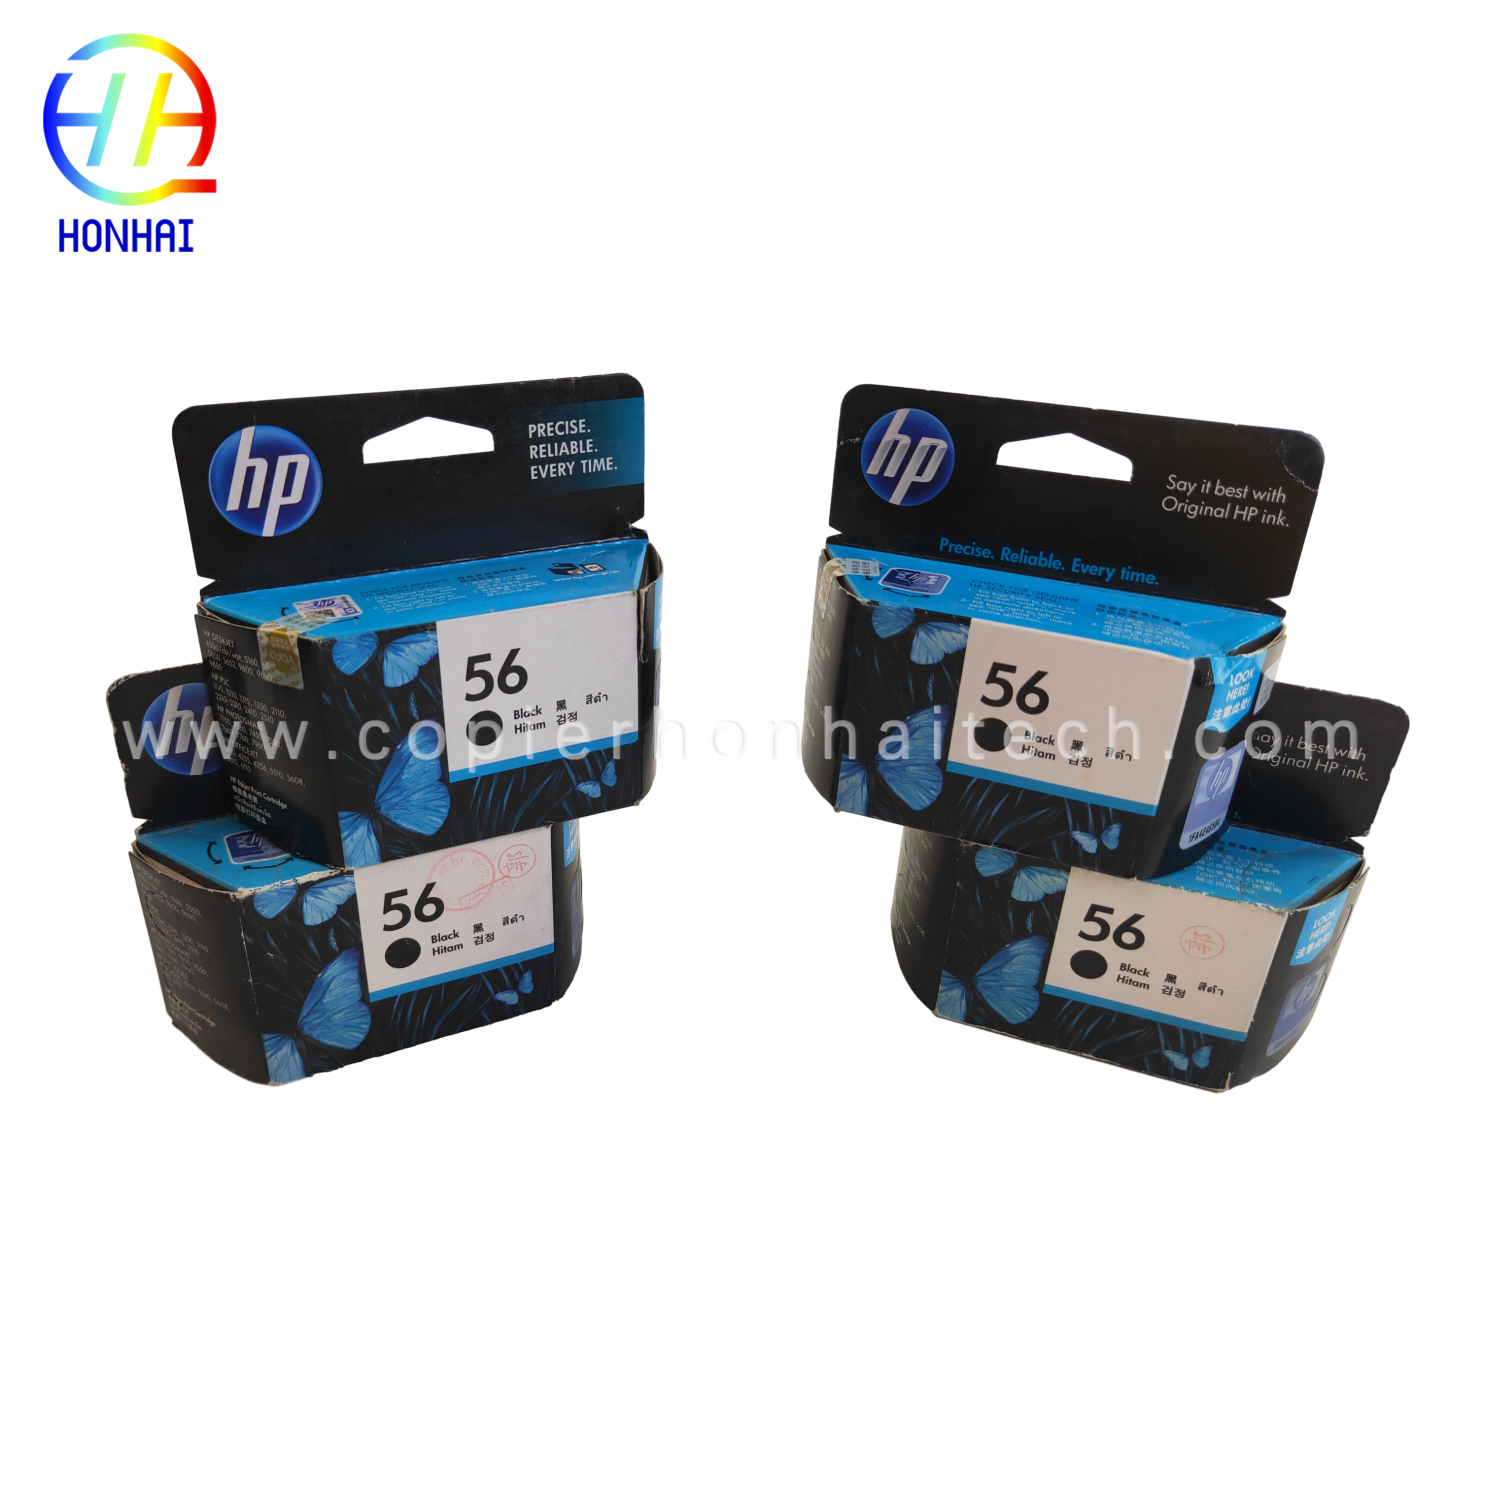 https://www.copierhonhaitech.com/original-black-printer-ink-cartridge-56-for-hp-deskjet-5550-5551-5552-product/